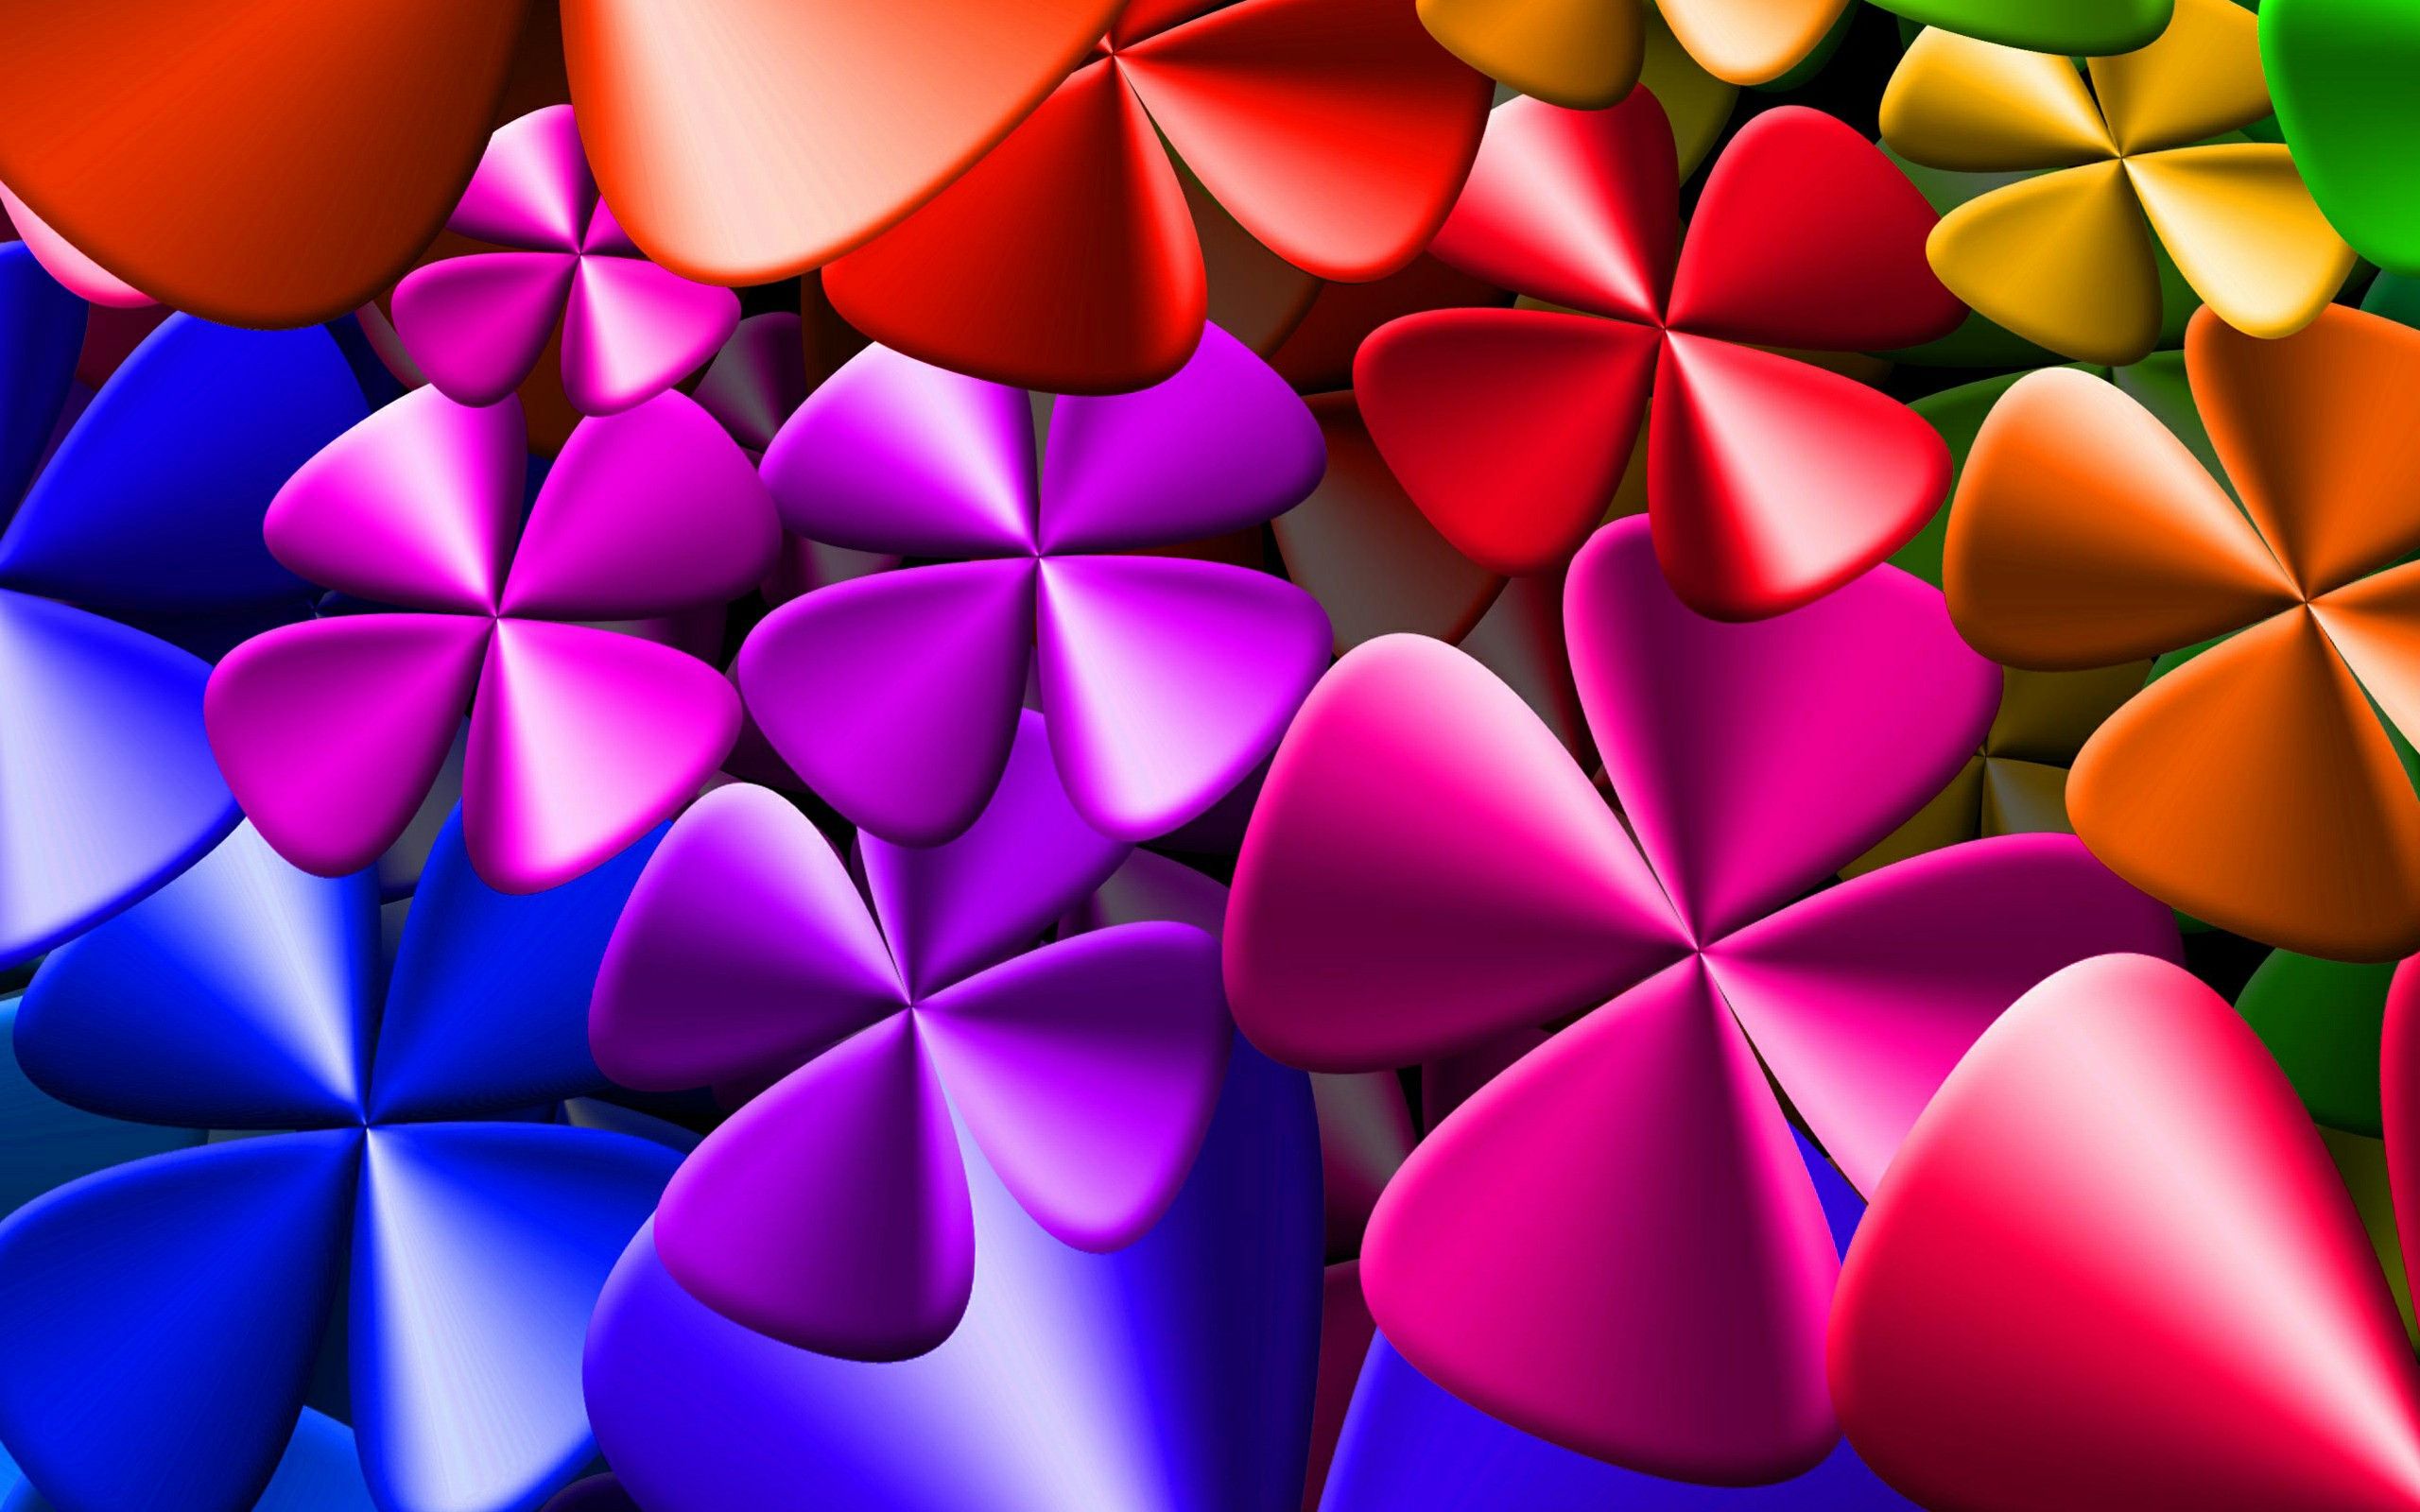 colorful wallpaper,petal,frangipani,purple,pattern,colorfulness